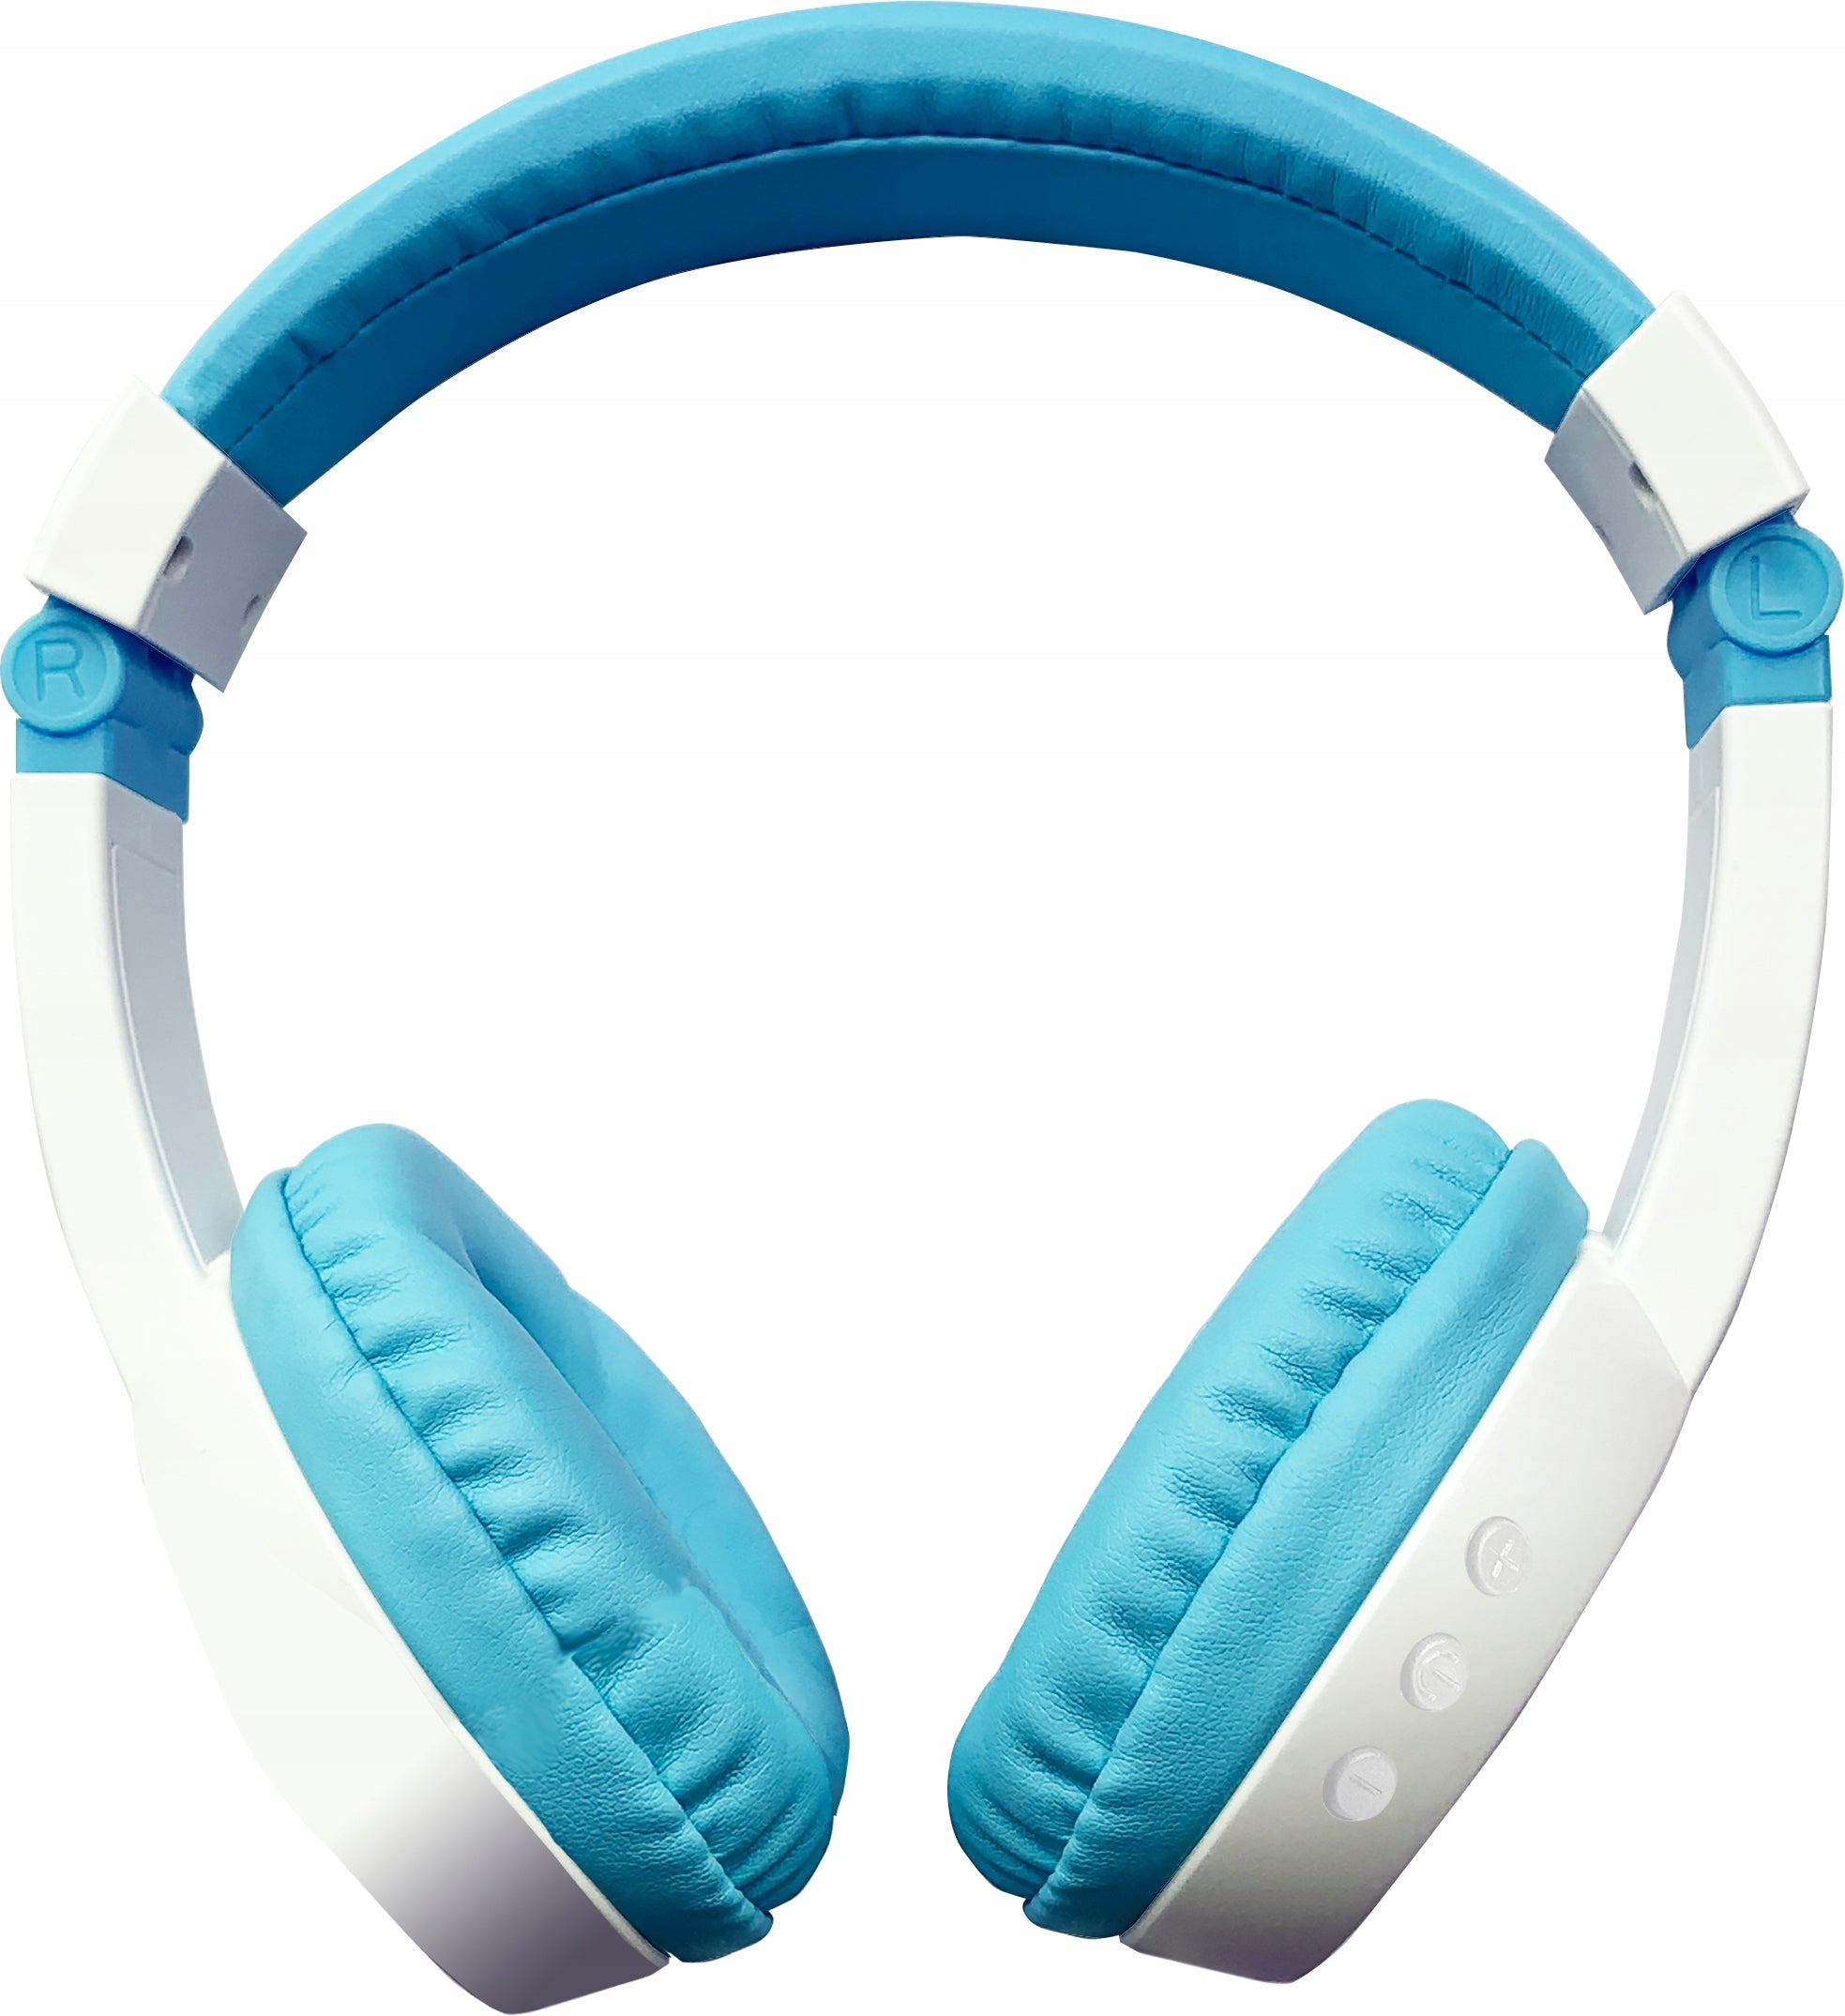 Crayola Customizable Bluetooth Headphones